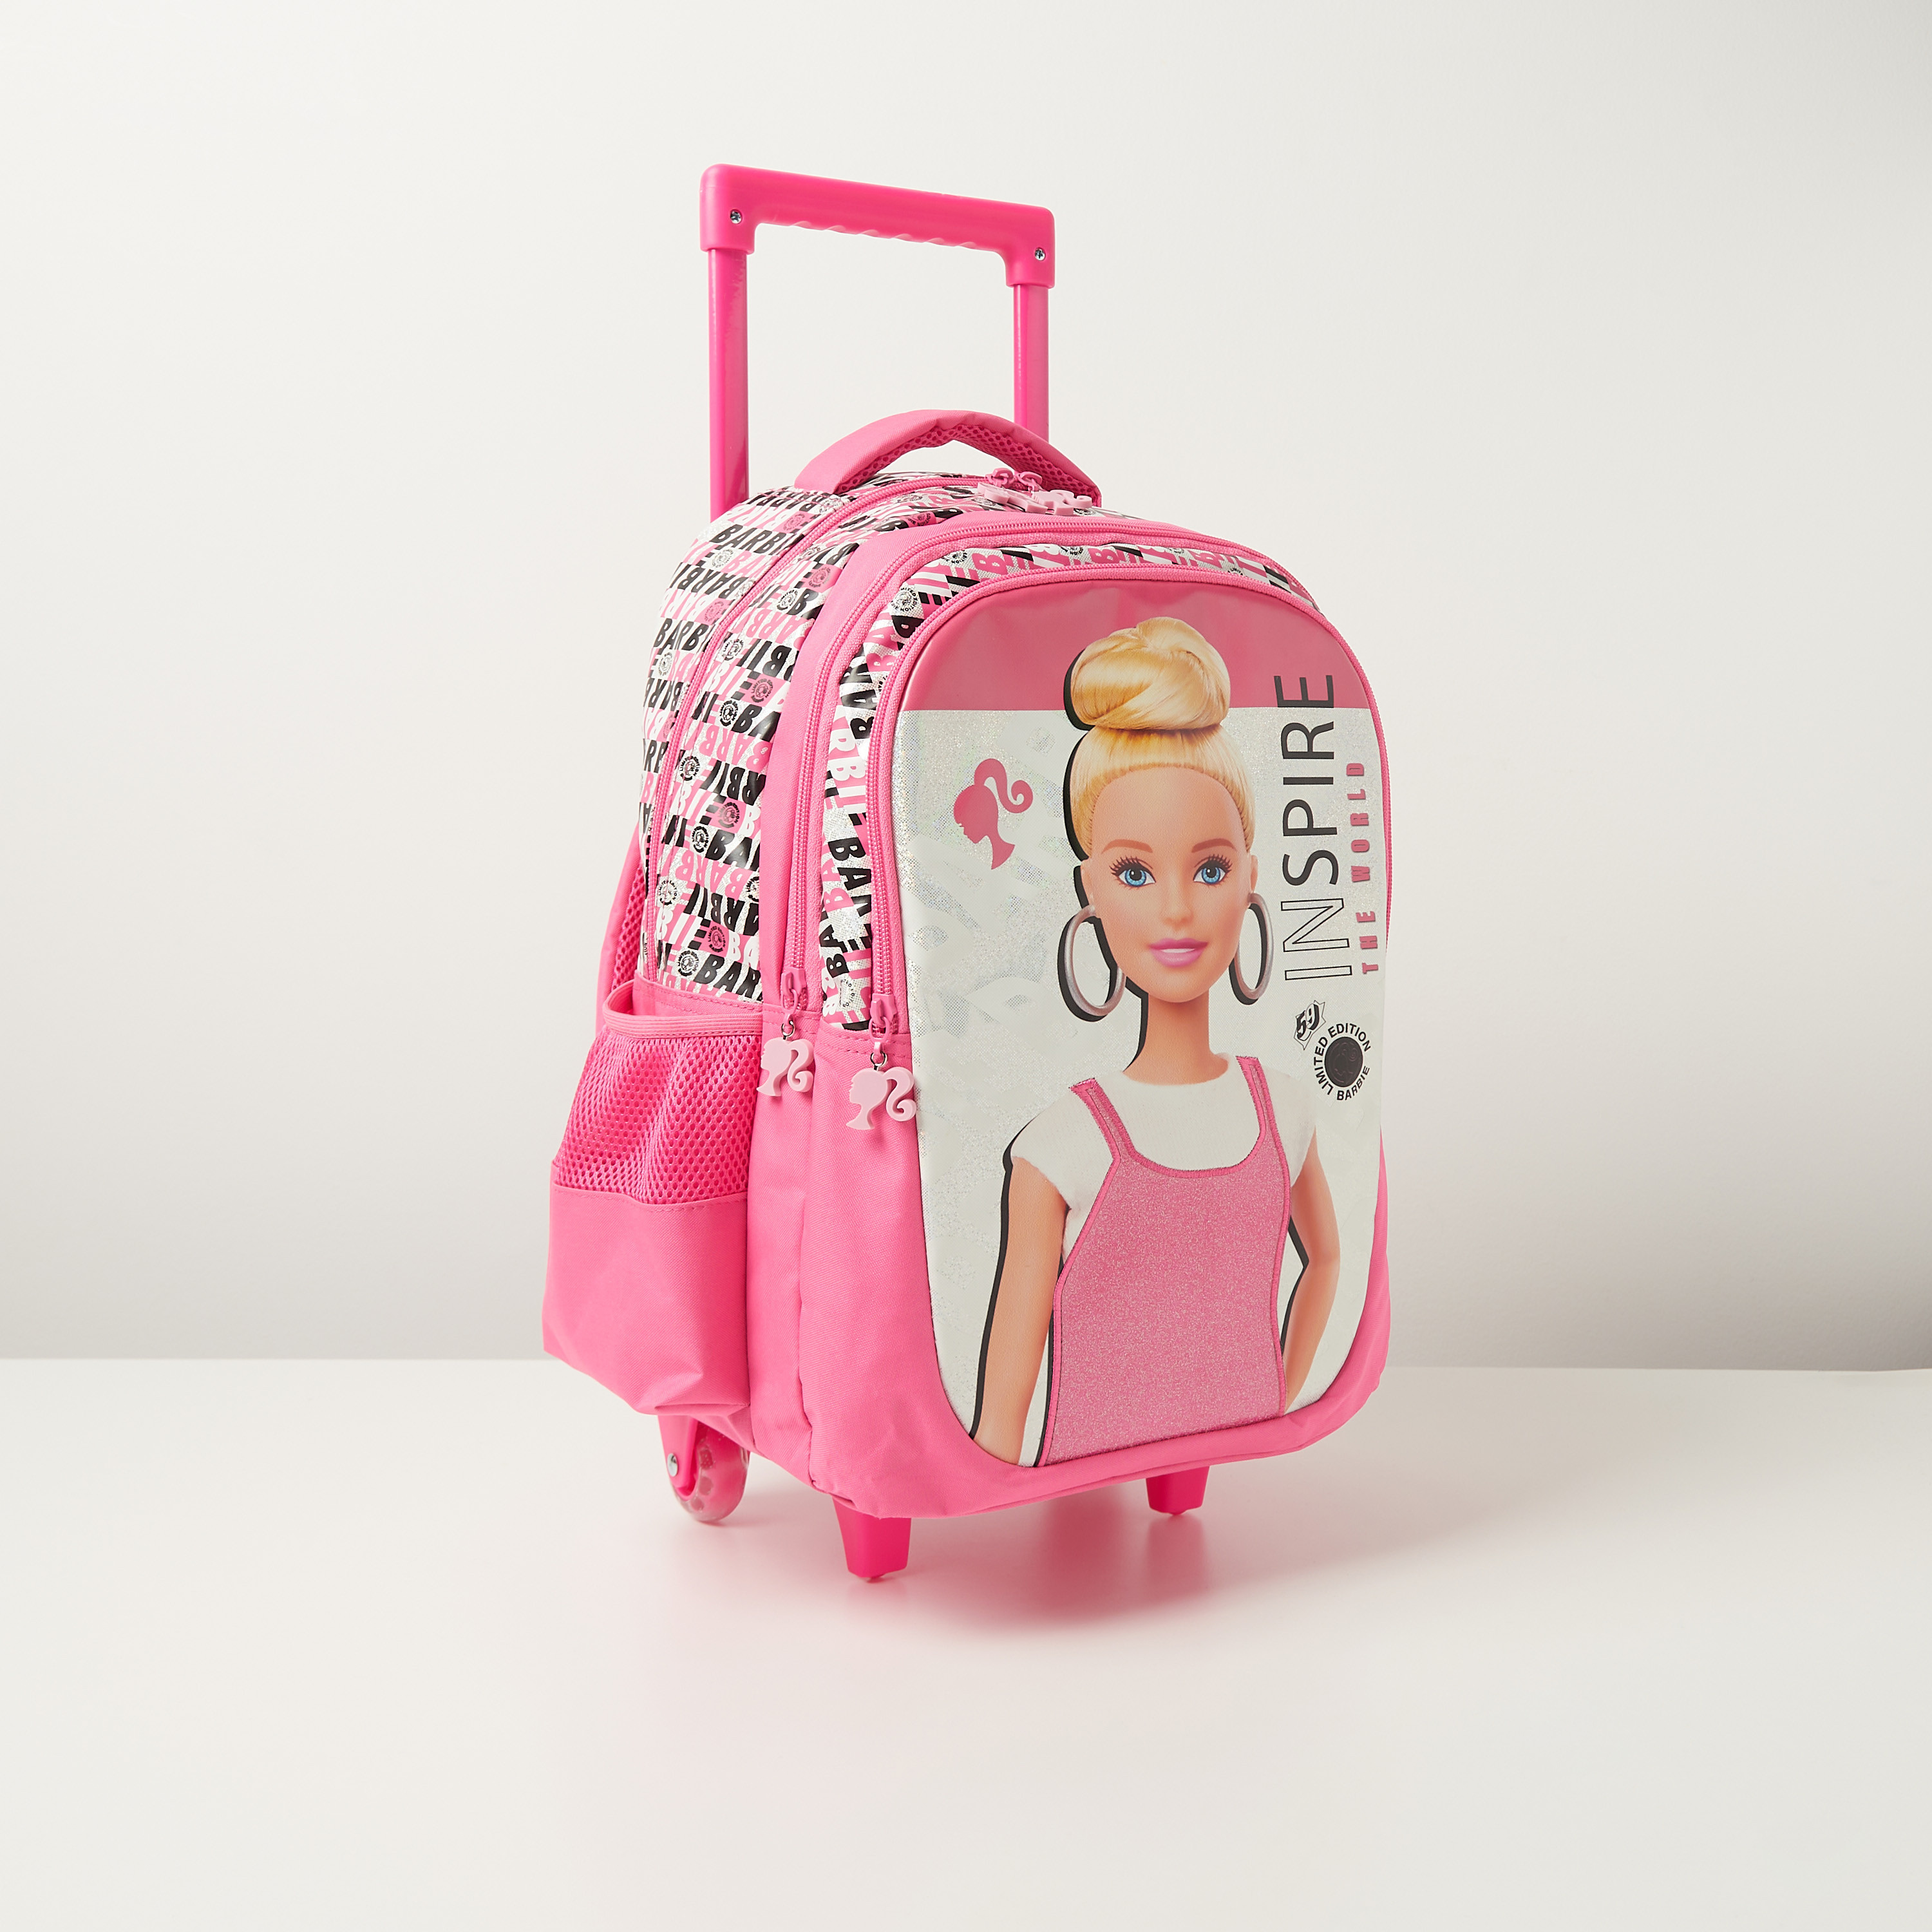 Buy Barbie Trolley Bag Pink online in India on GiggleGlory.com